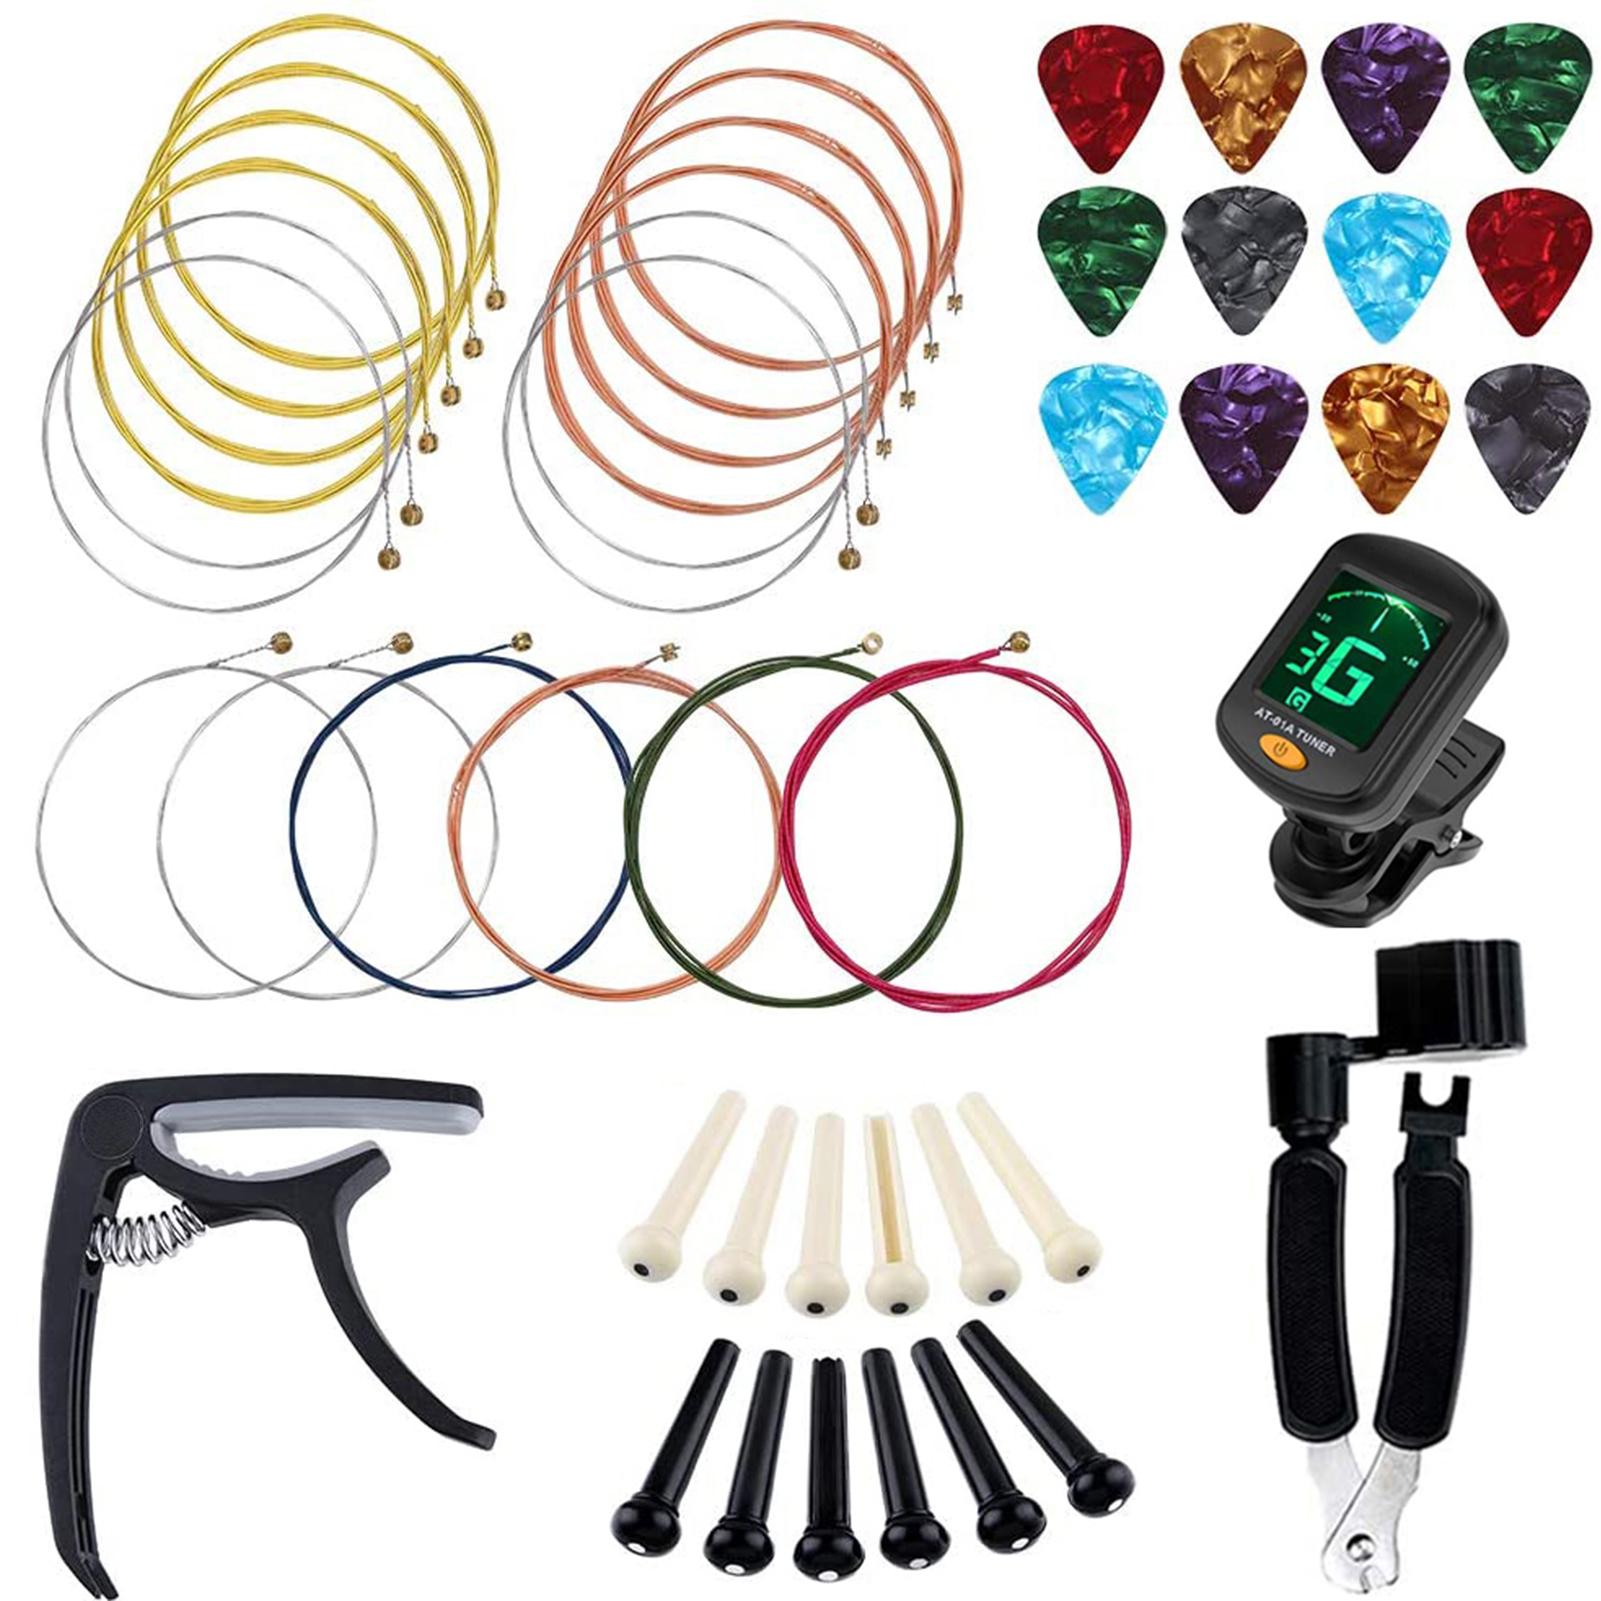 Gitaar Accessoires Kit Instrument Tuner 3 In 1 Restring Tool Picks Capo Strings Muziek Apparatuur Accessoires Bevestiging